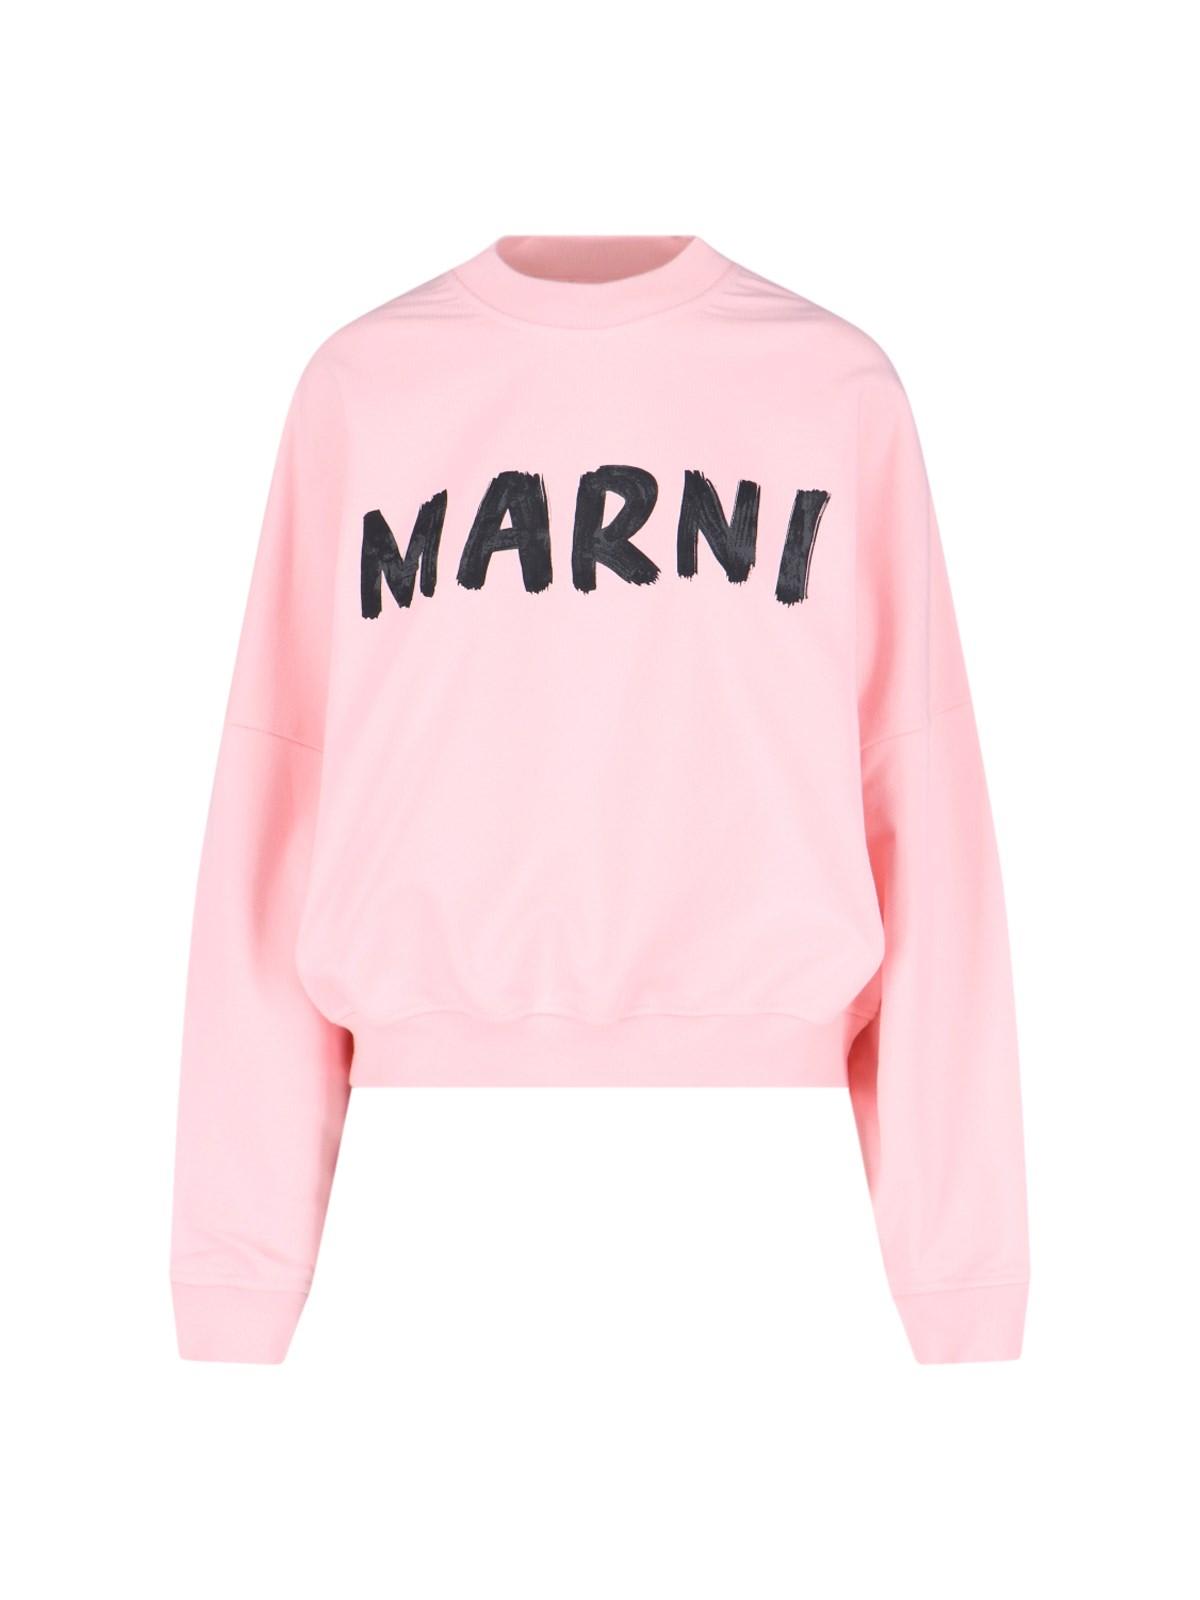 Marni Logo Crewneck Sweatshirt